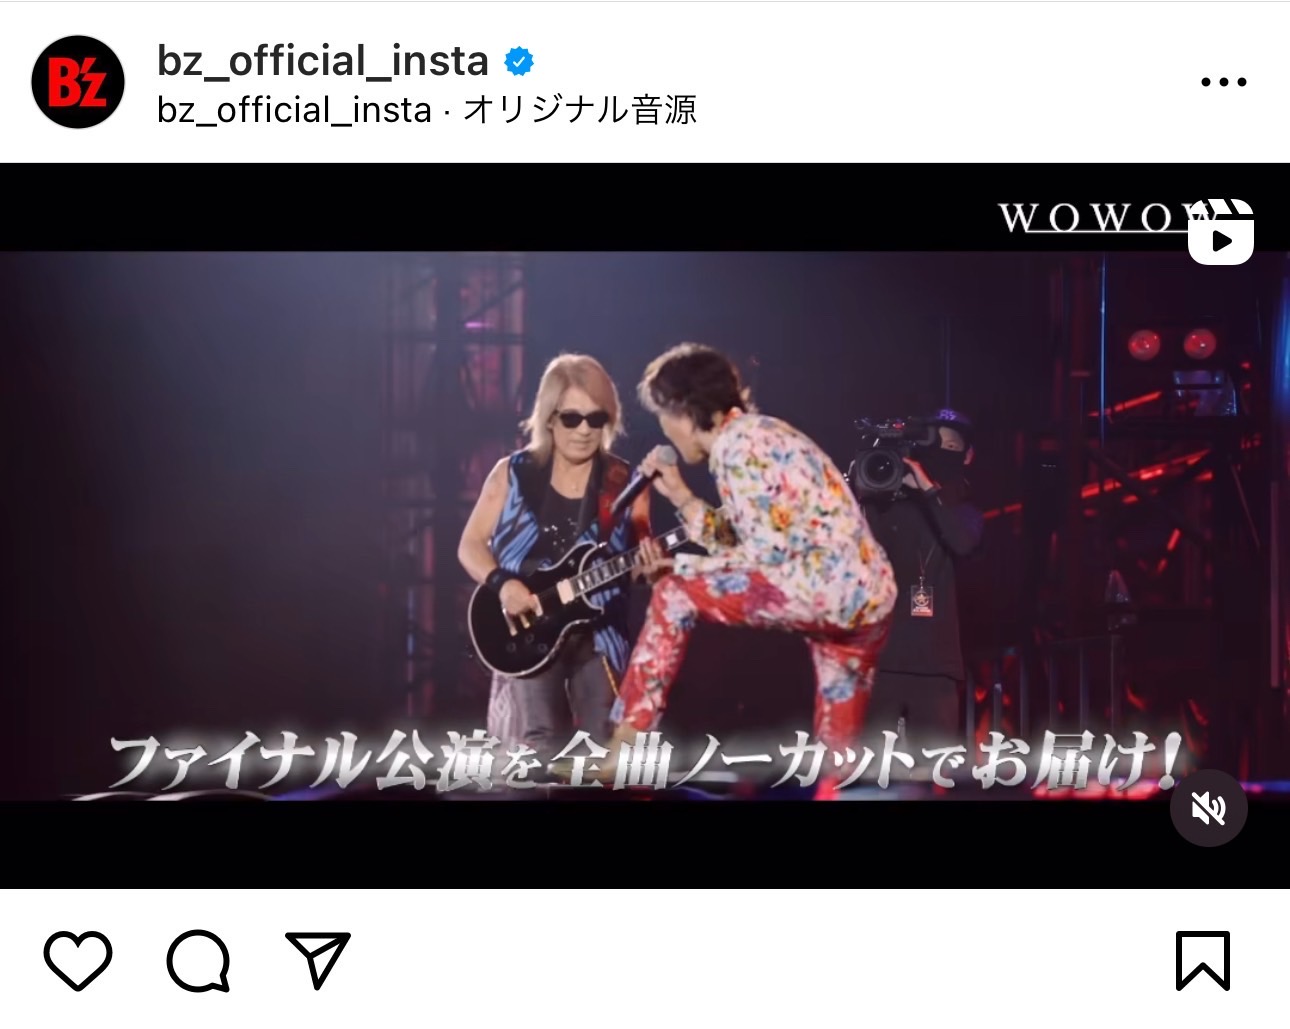 B’z公式Instagramが投稿したWOWOW「STARS」の放送告知映像のキャプチャ